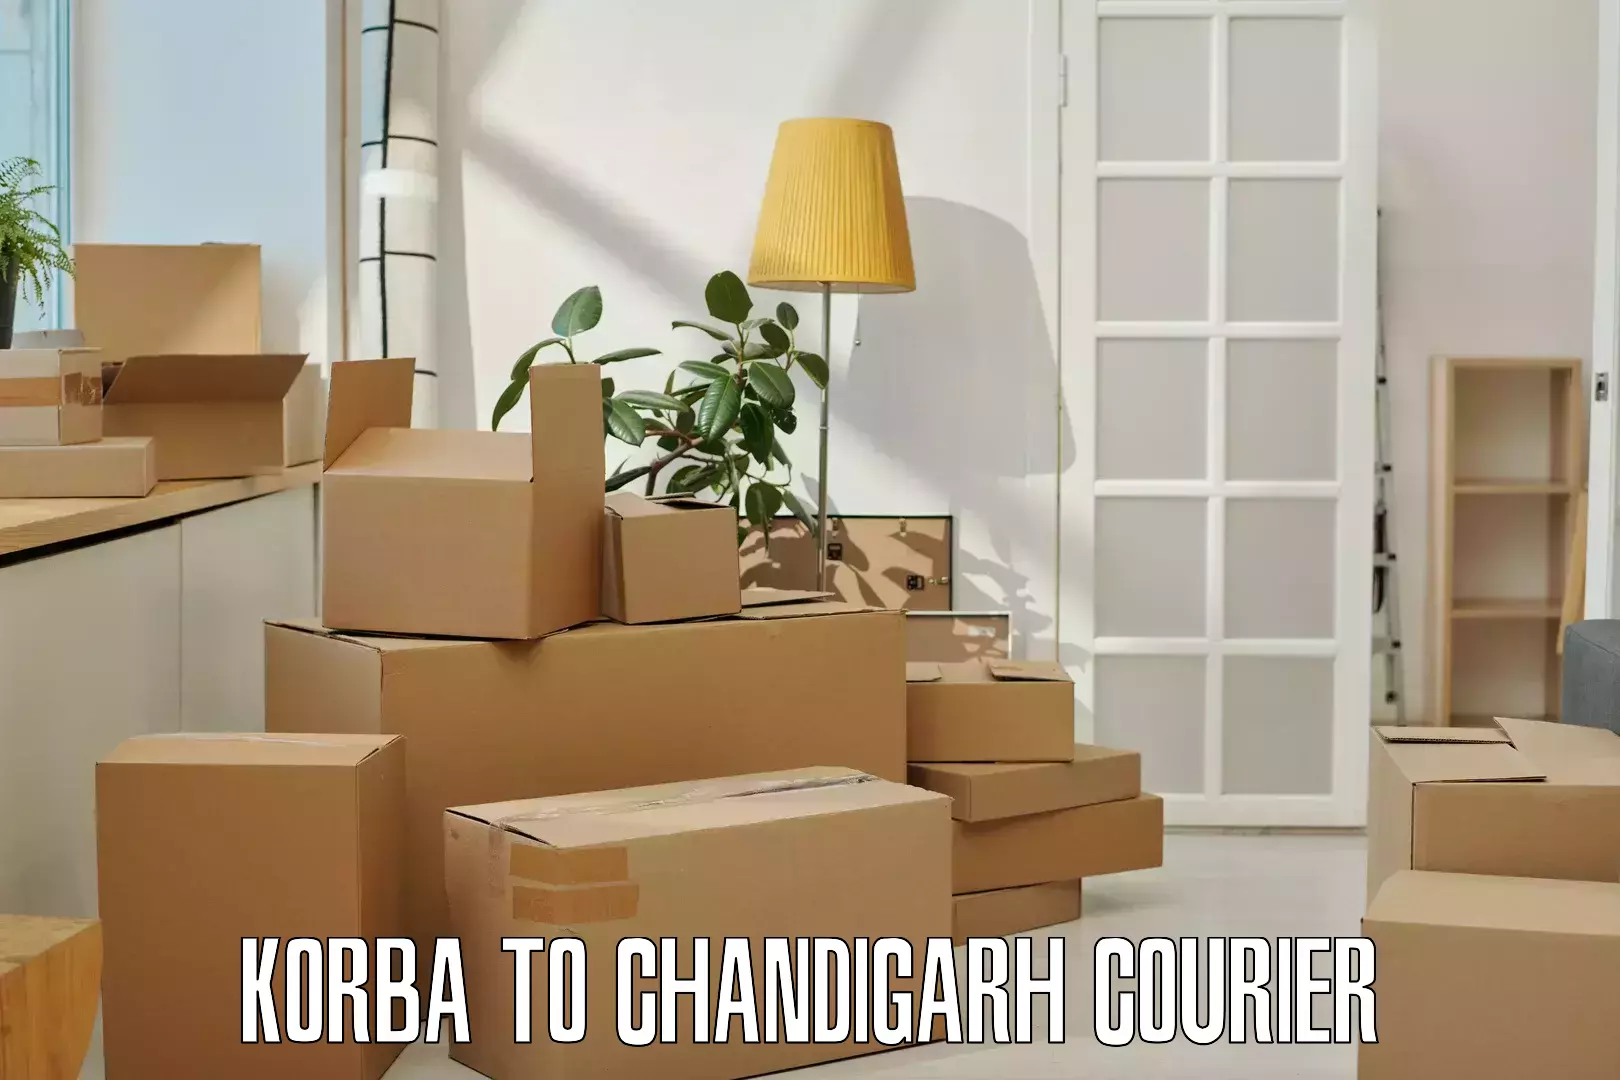 Courier service innovation Korba to Chandigarh